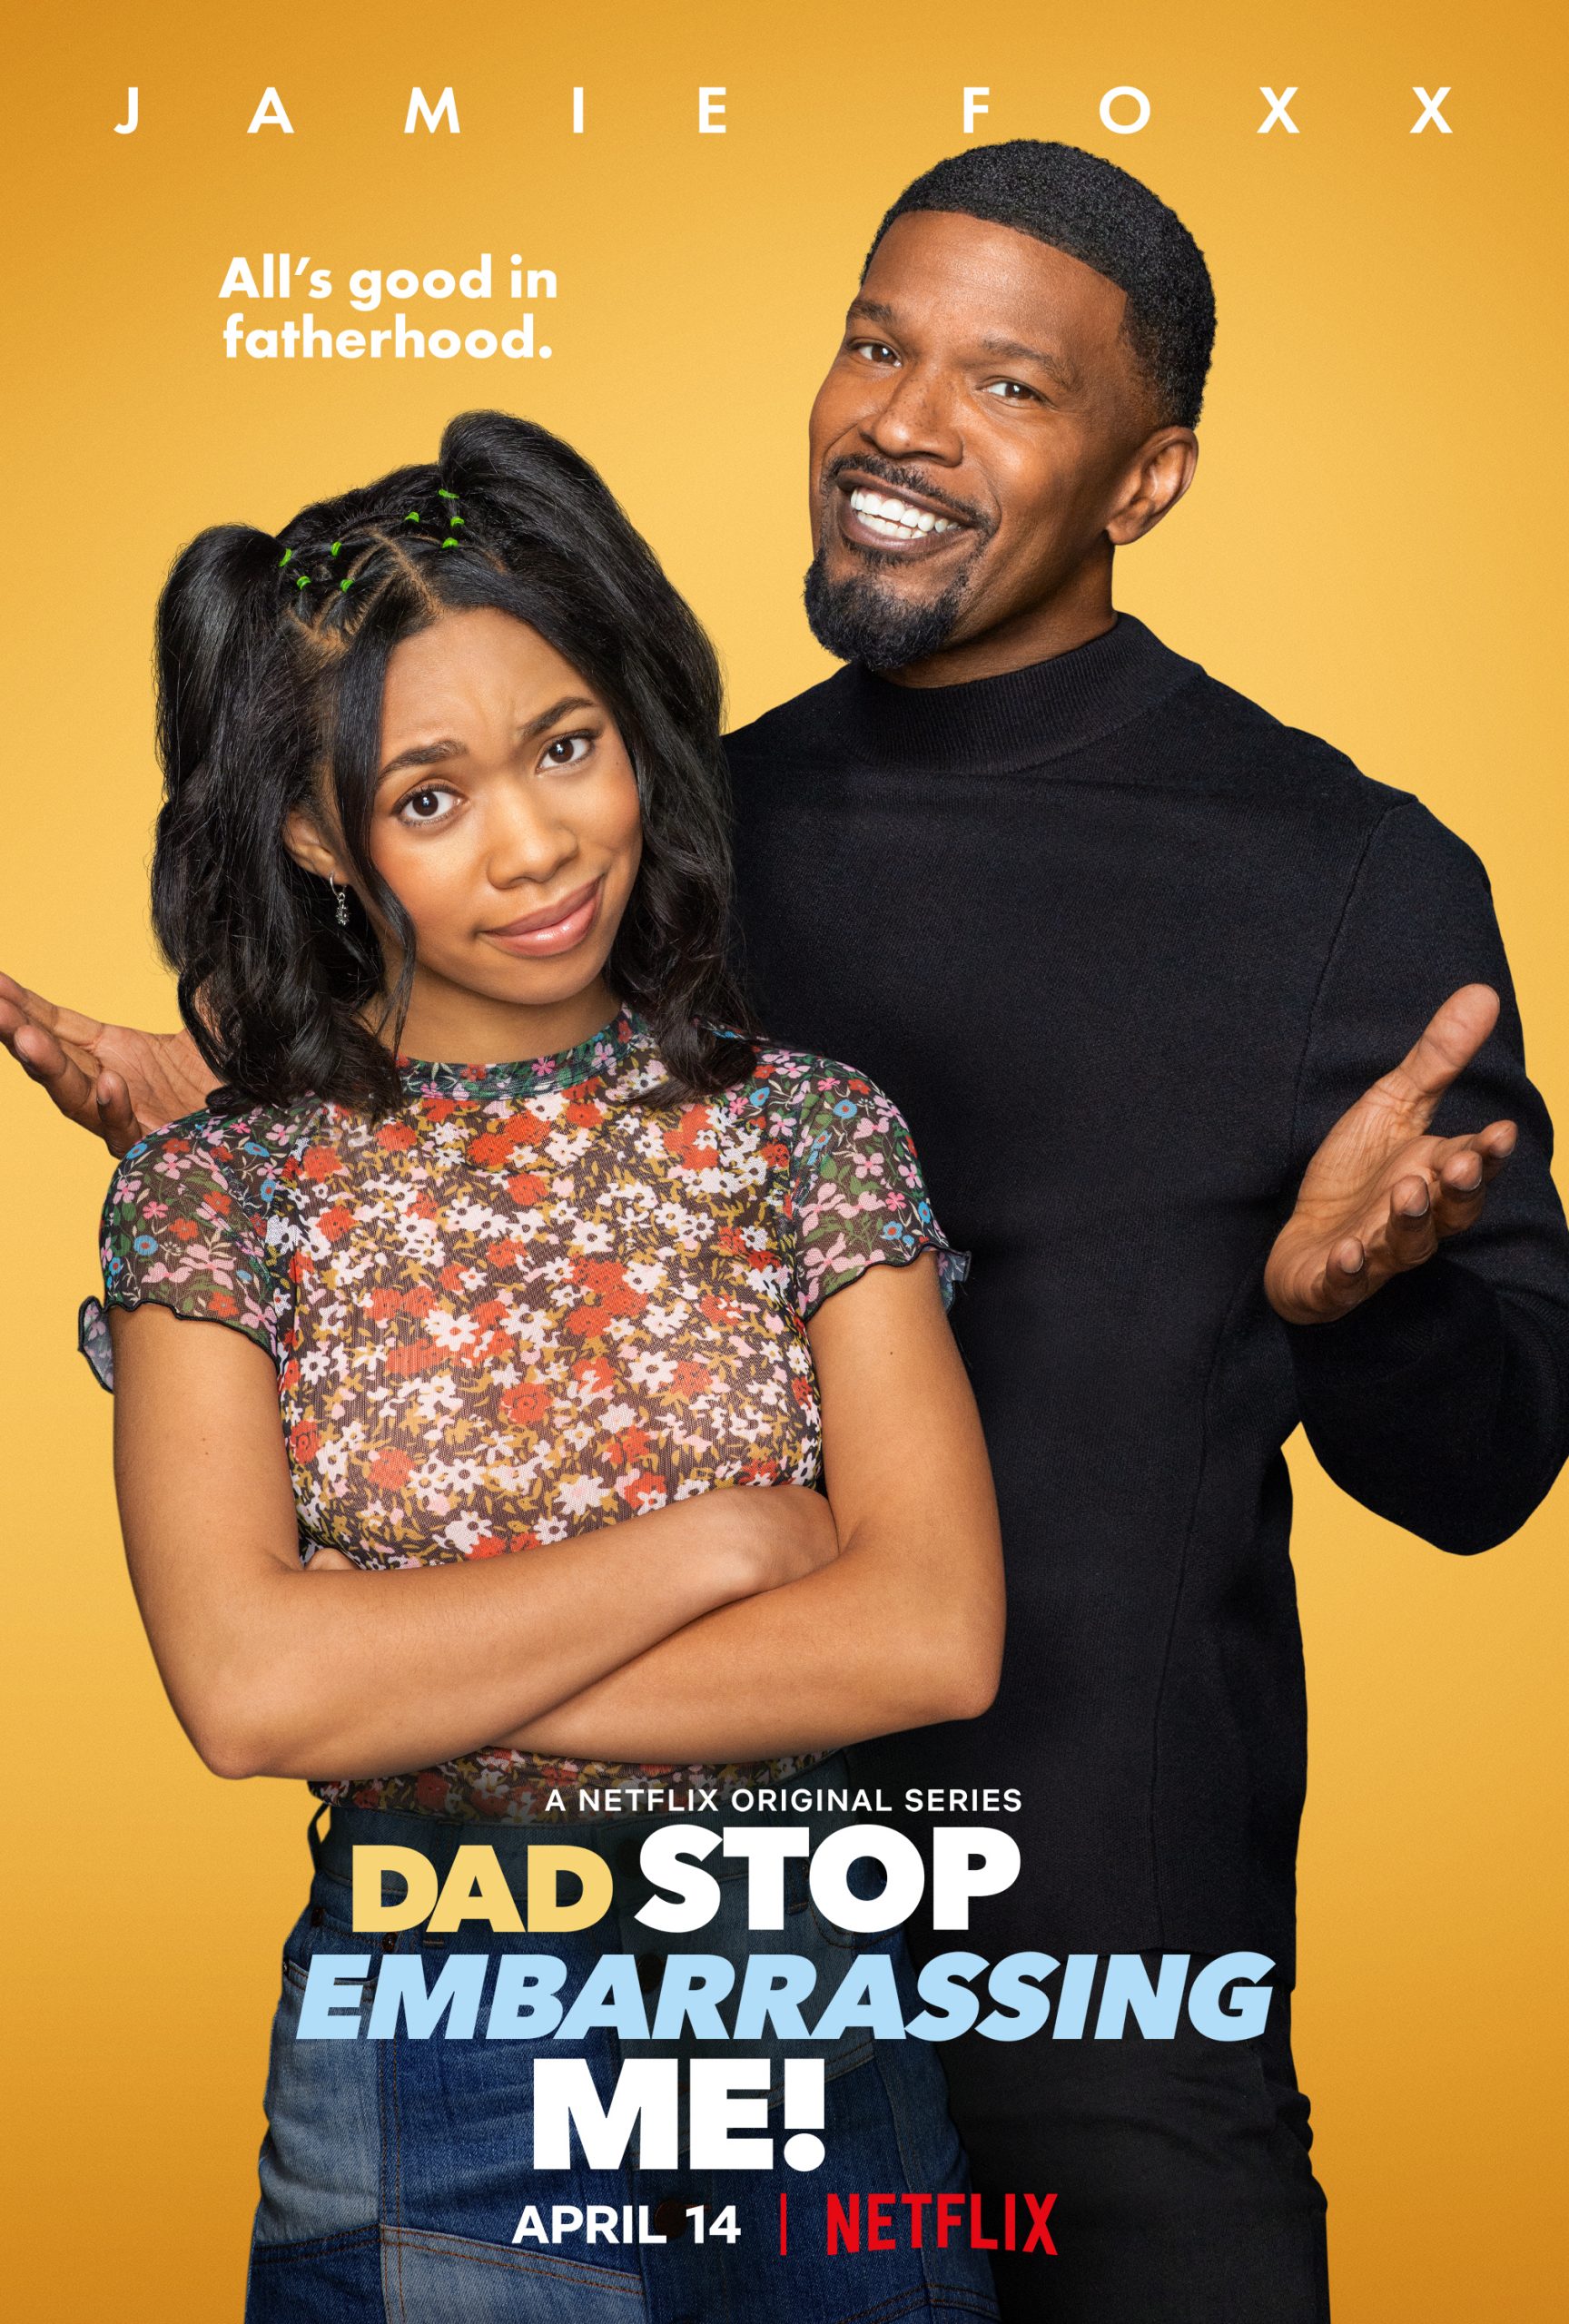 New Show: Netflix’s ‘Dad Stop Embarrassing Me!’ Starring Jamie Foxx